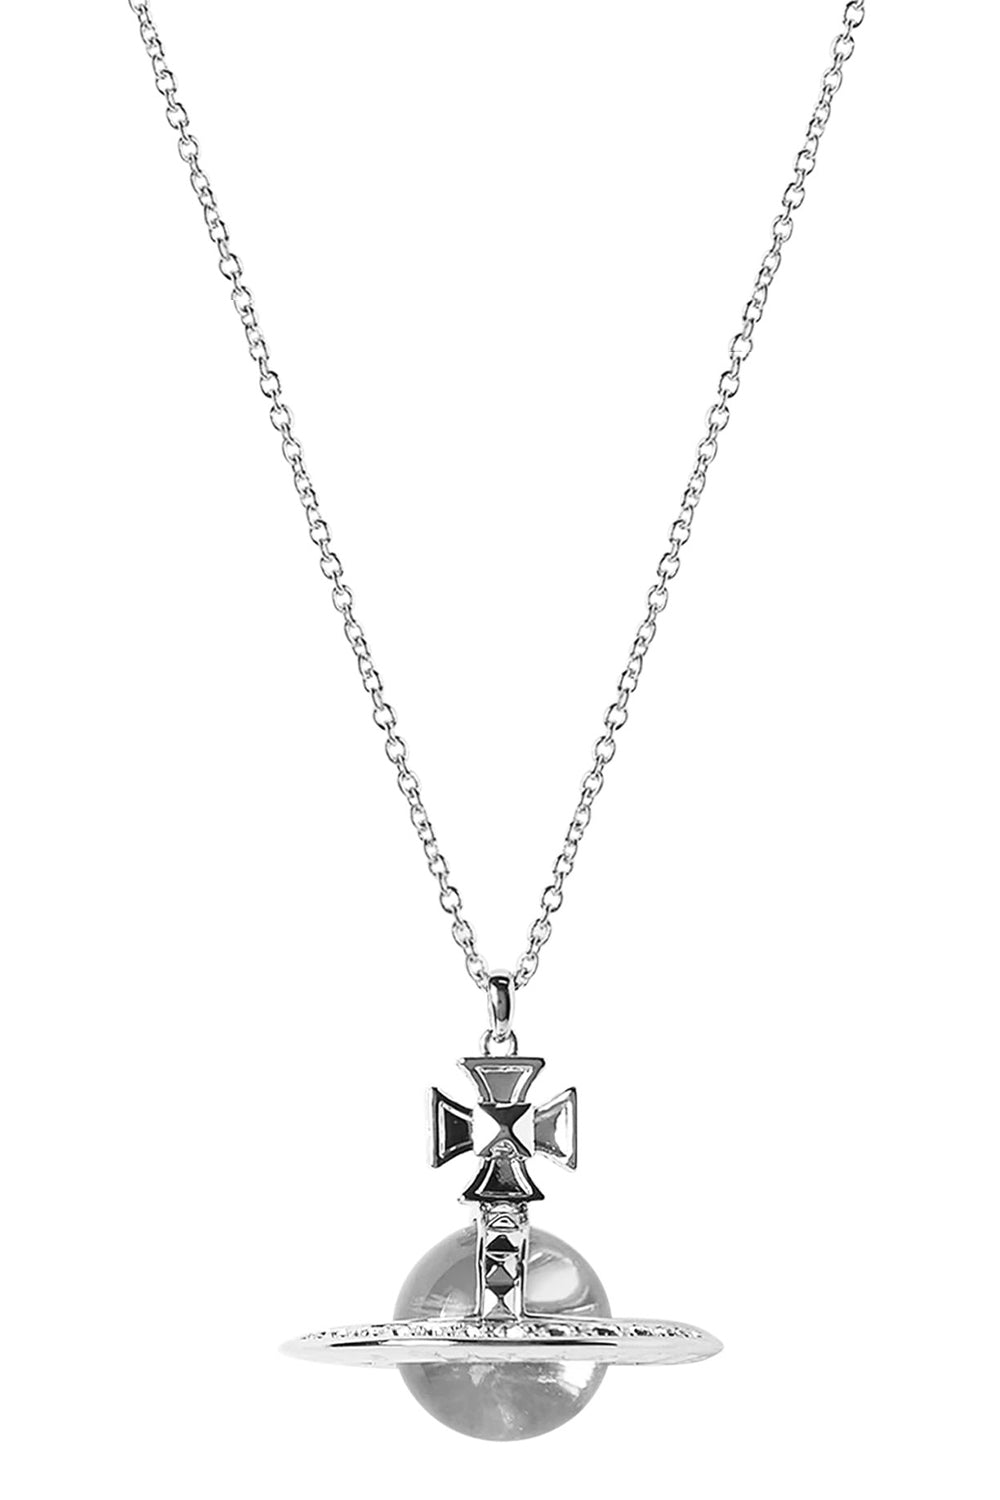 Vivienne Westwood Necklace (Silver)